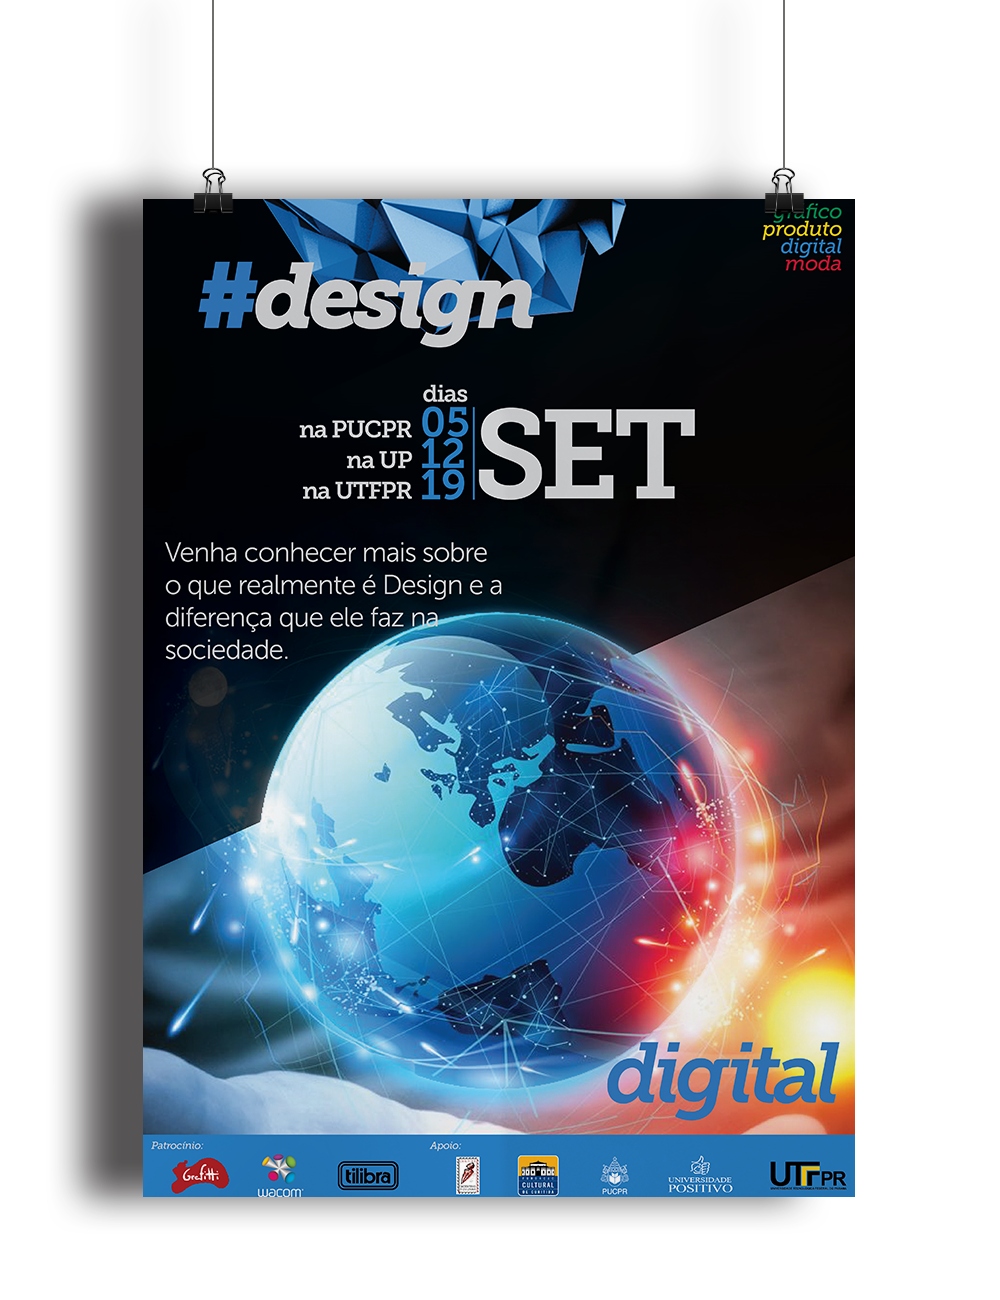 #Design Fair Event wacom Cintiq 3D Web HotSite profession Dynamic modern interactive